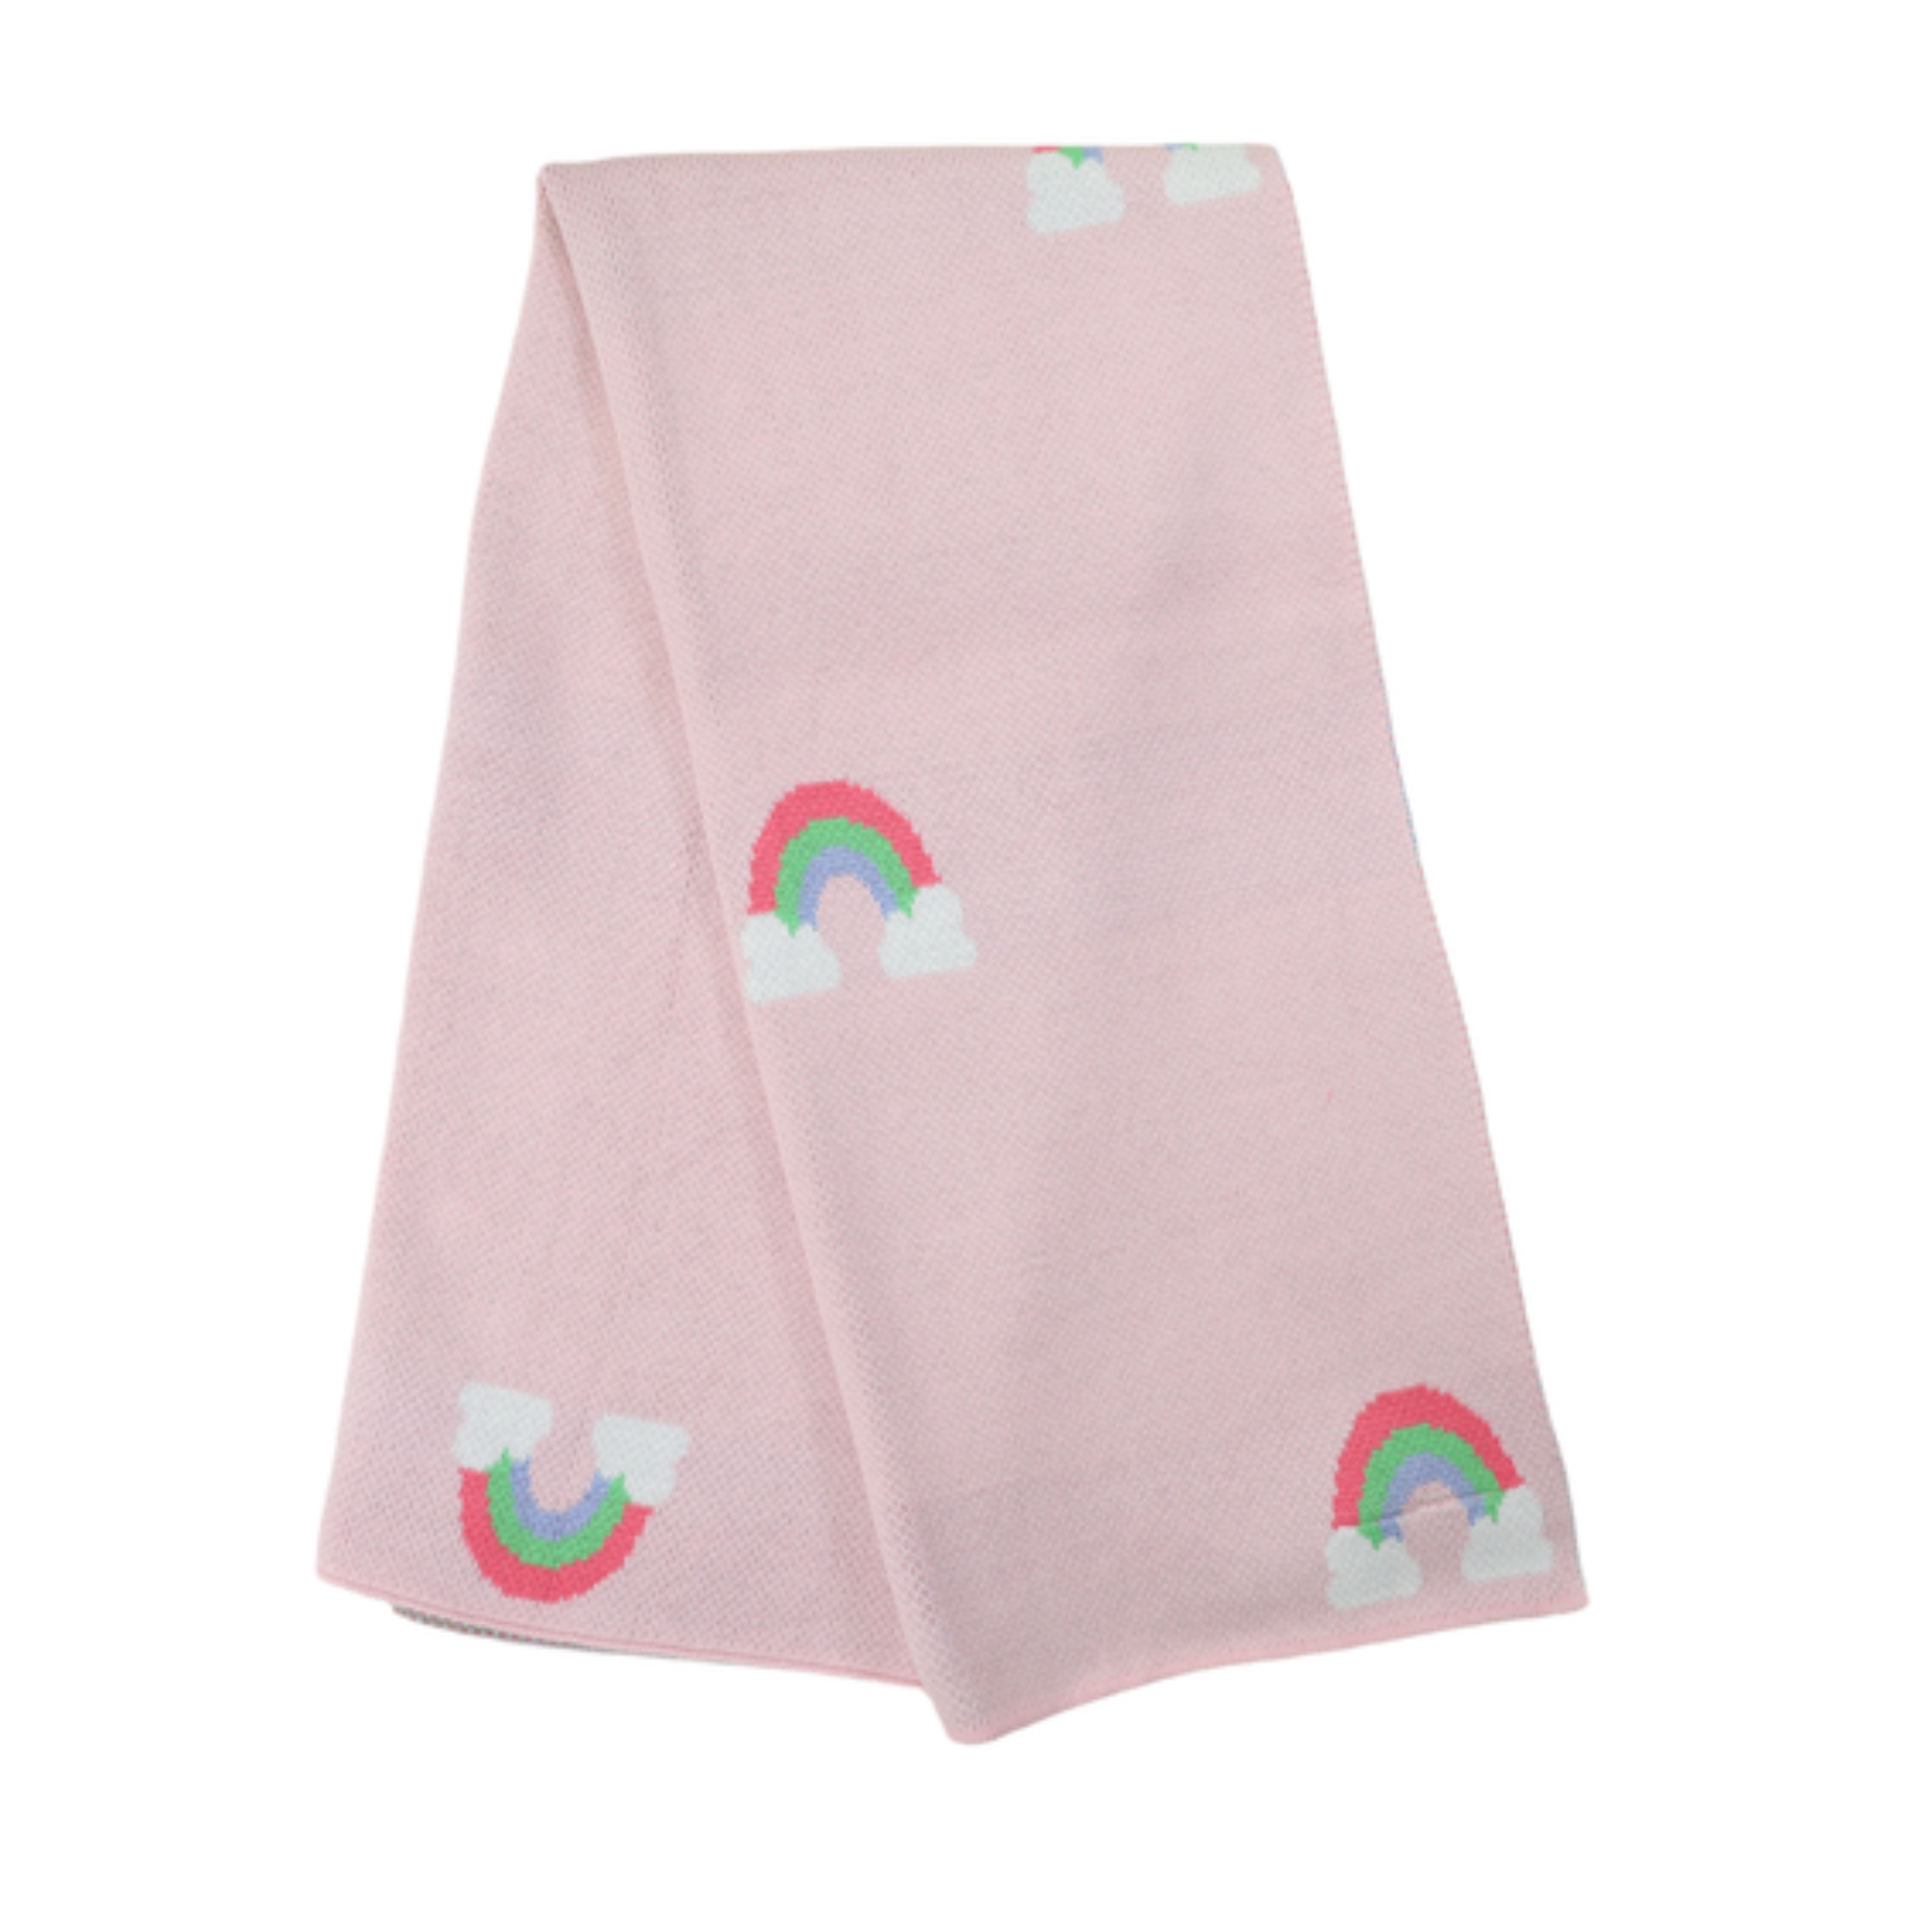 Korango Rainbow Knit Blanket - Fairytale  Pink